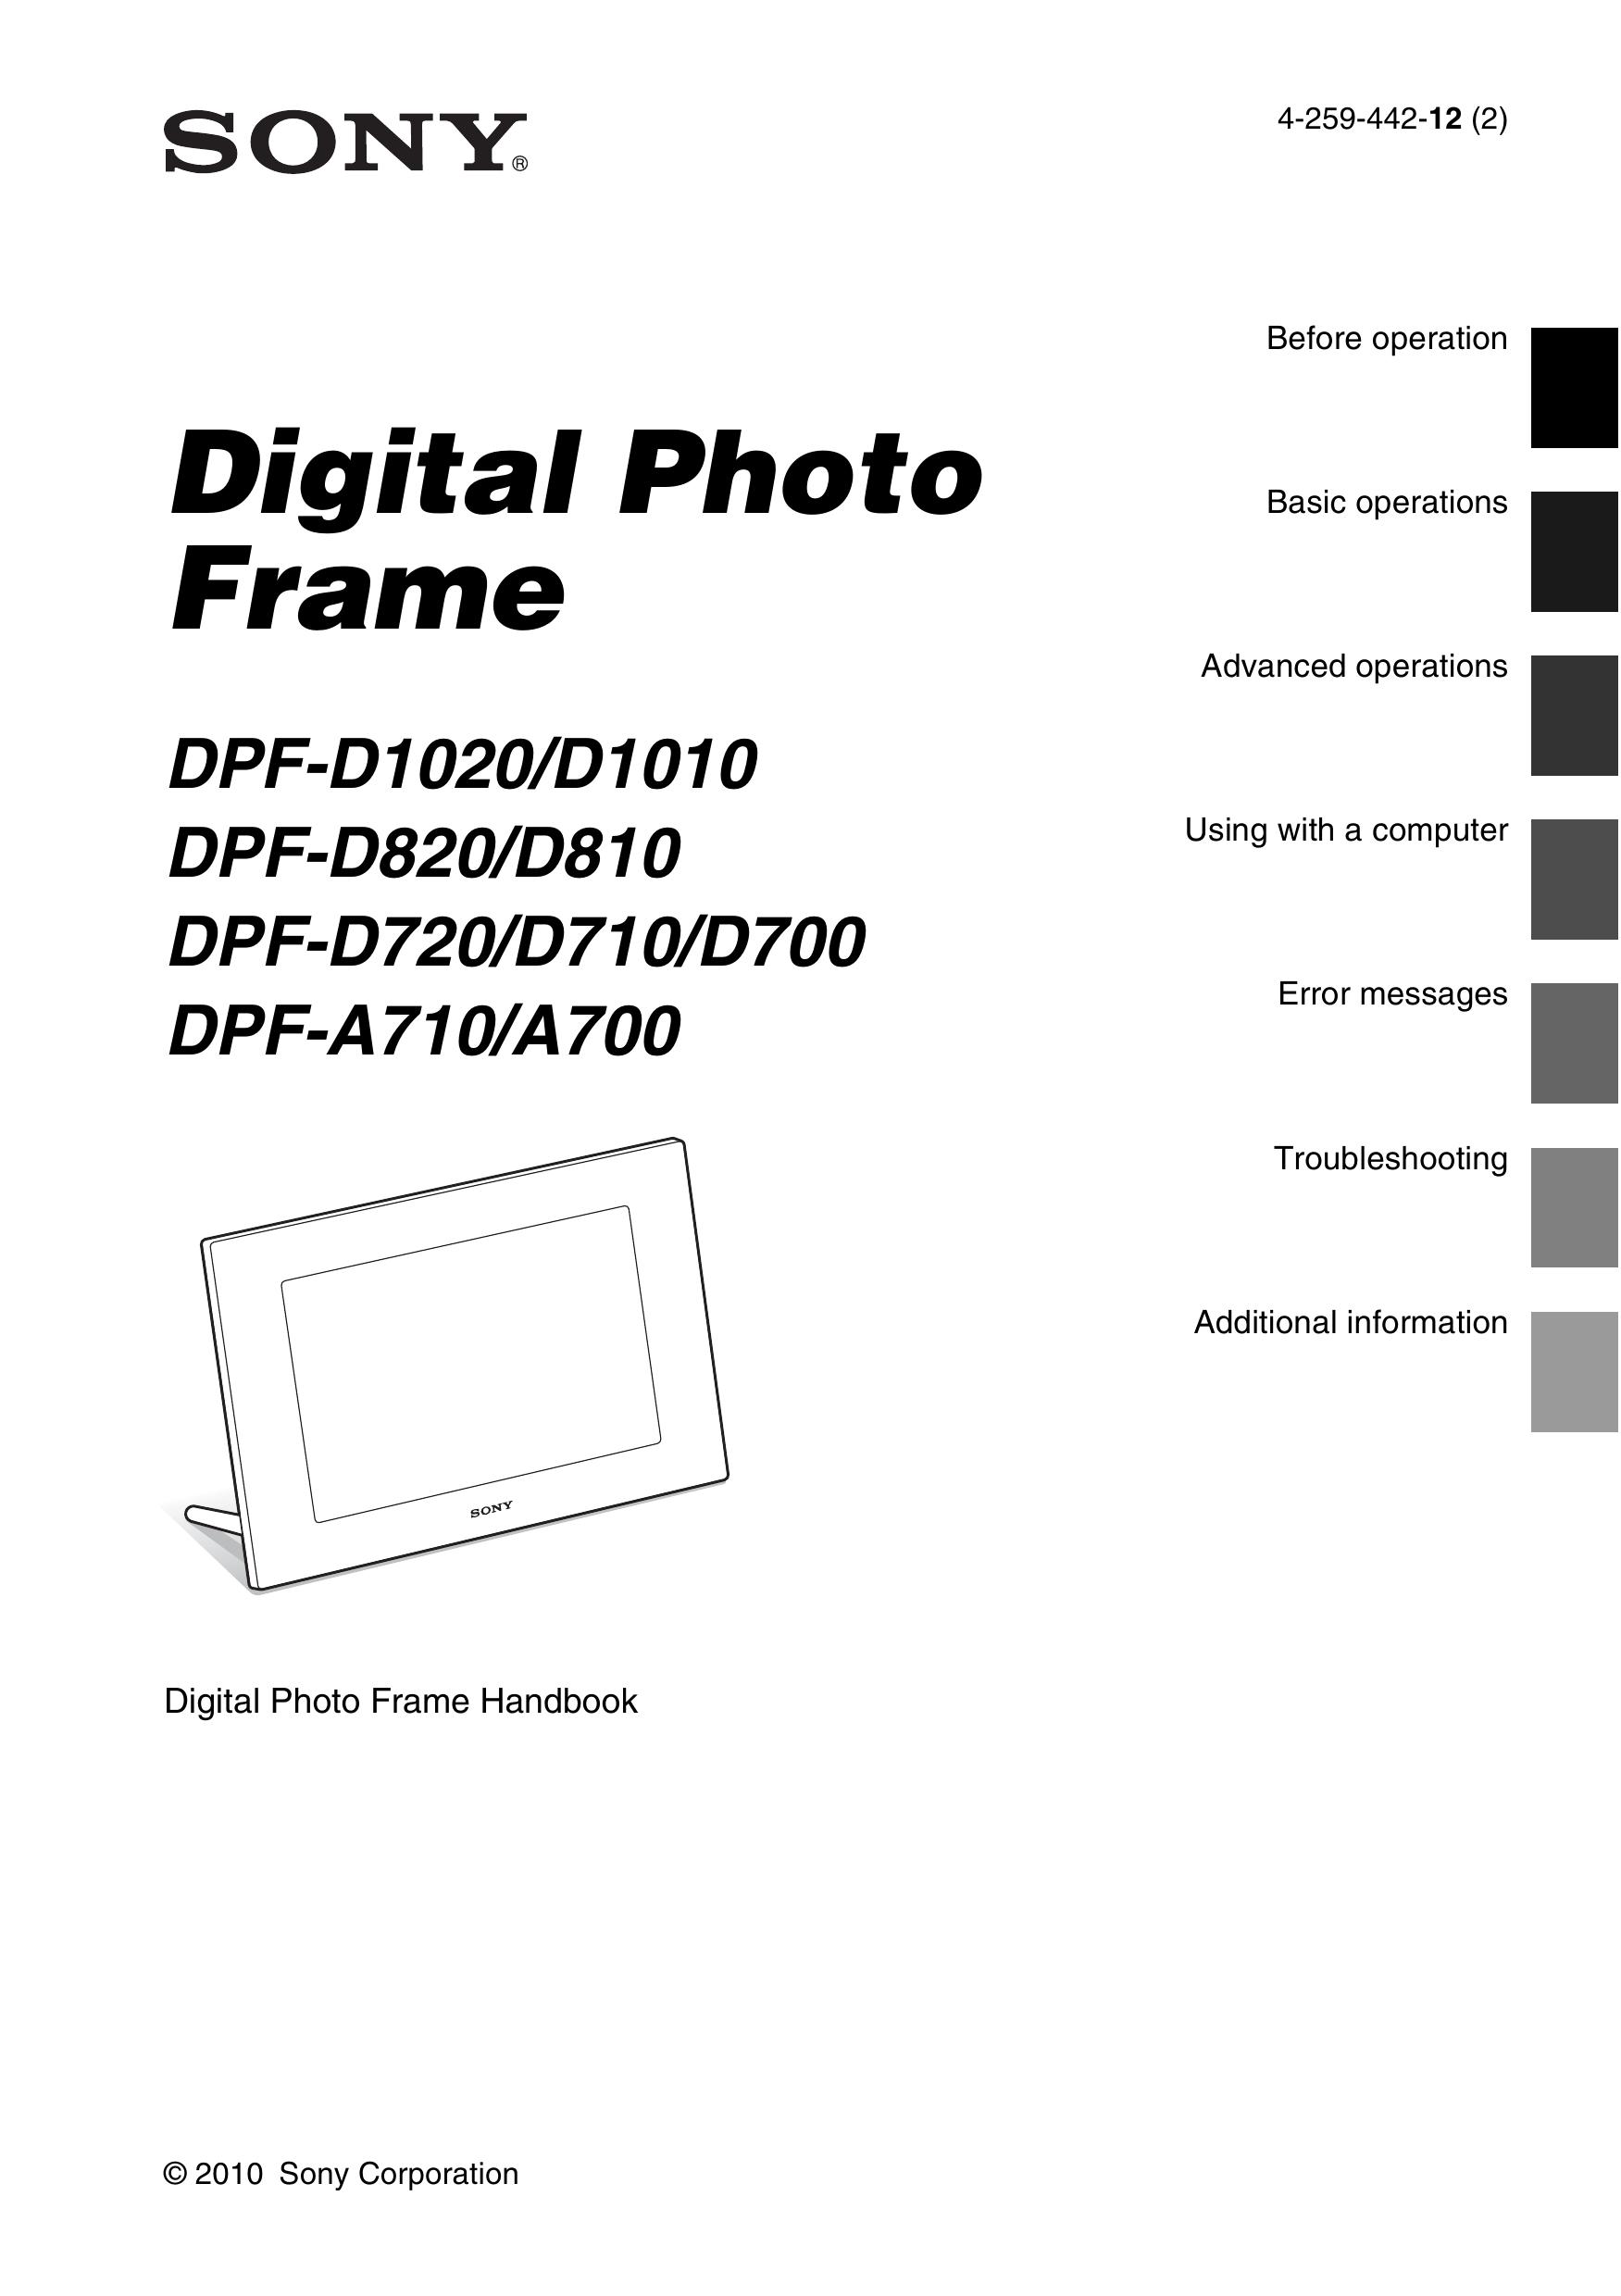 Sony DPF-A710/A700 Digital Photo Frame User Manual